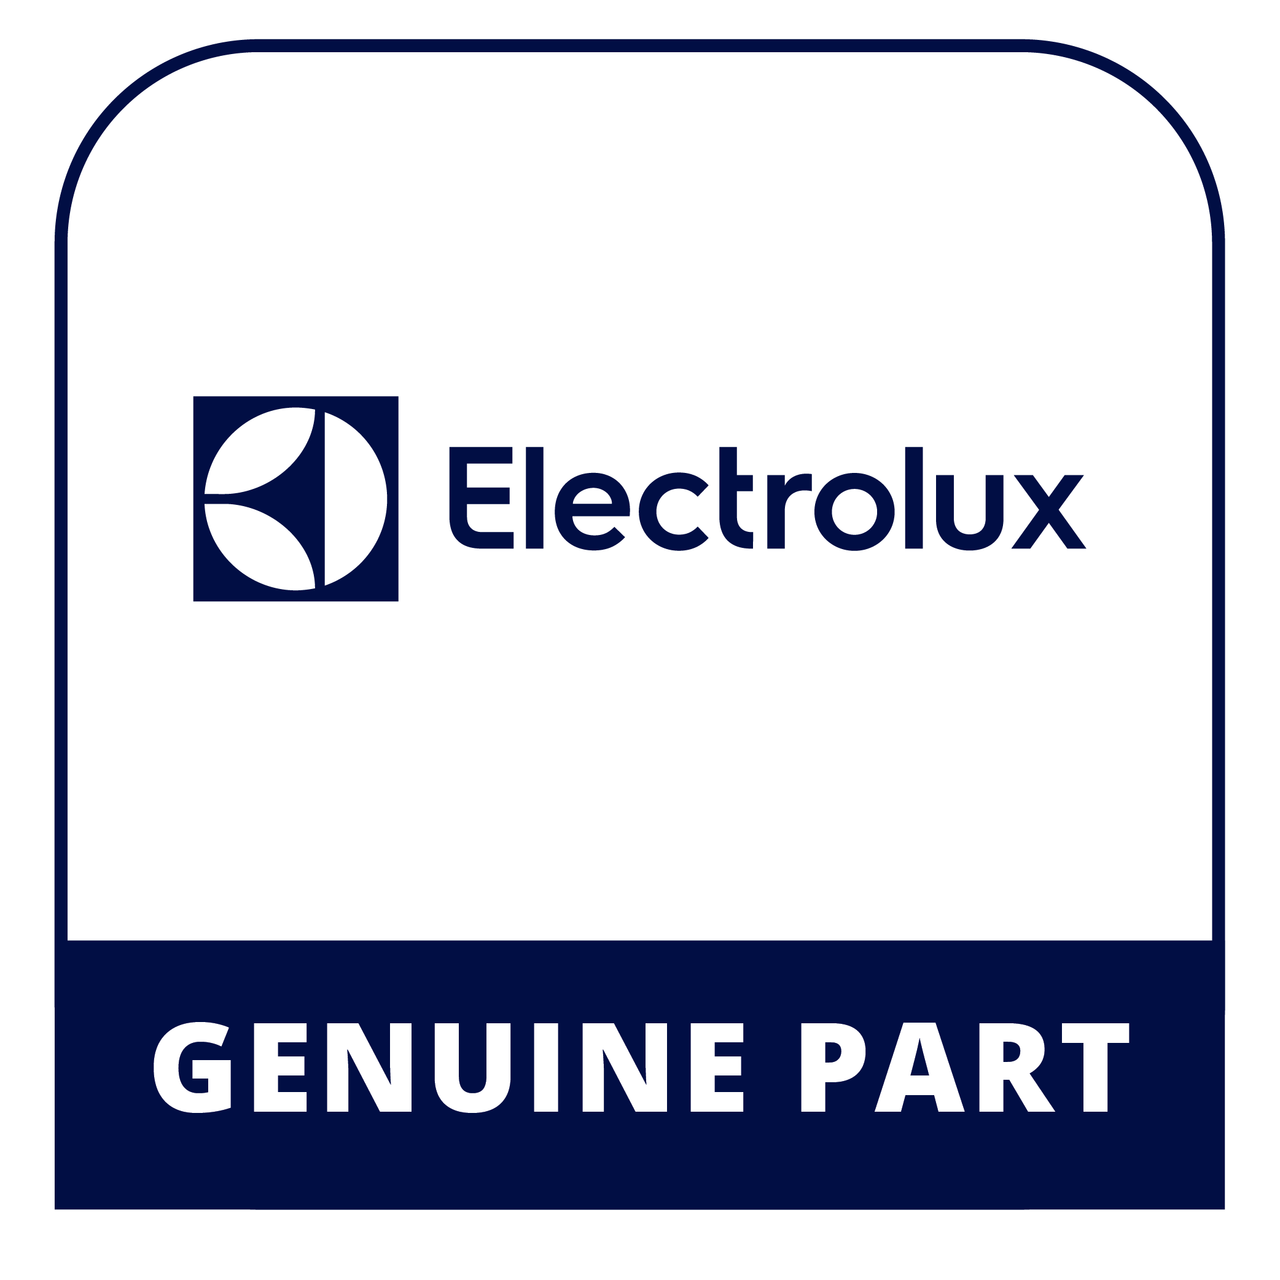 Frigidaire - Electrolux 316442501 - Knob - Genuine Electrolux Part